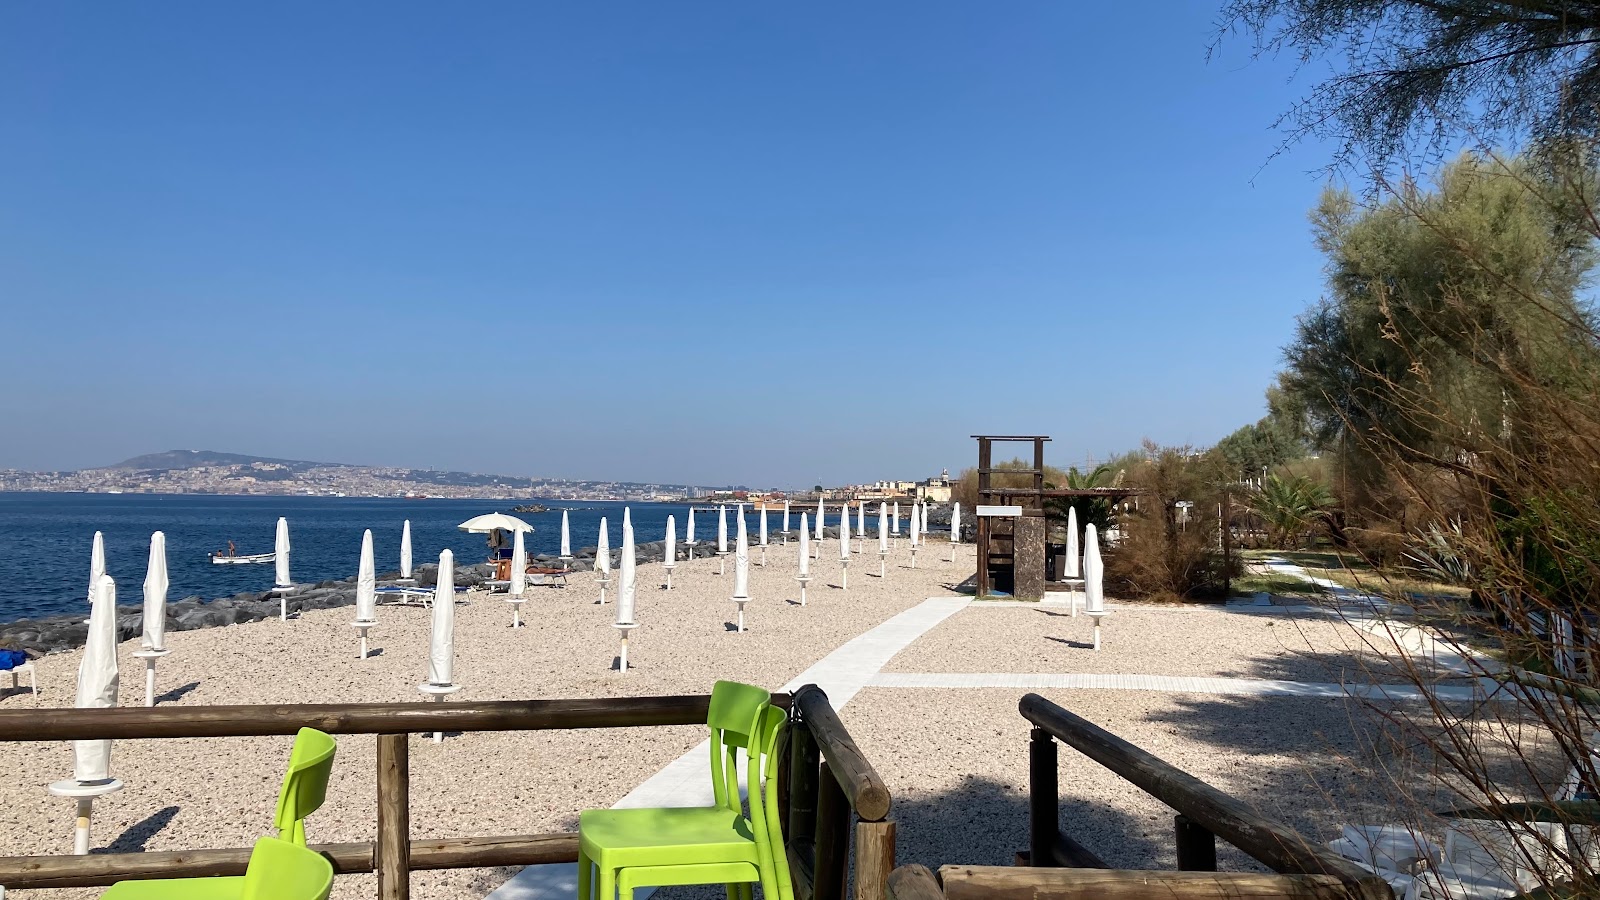 Foto af Spiaggia di Punta Quattroventi - populært sted blandt afslapningskendere